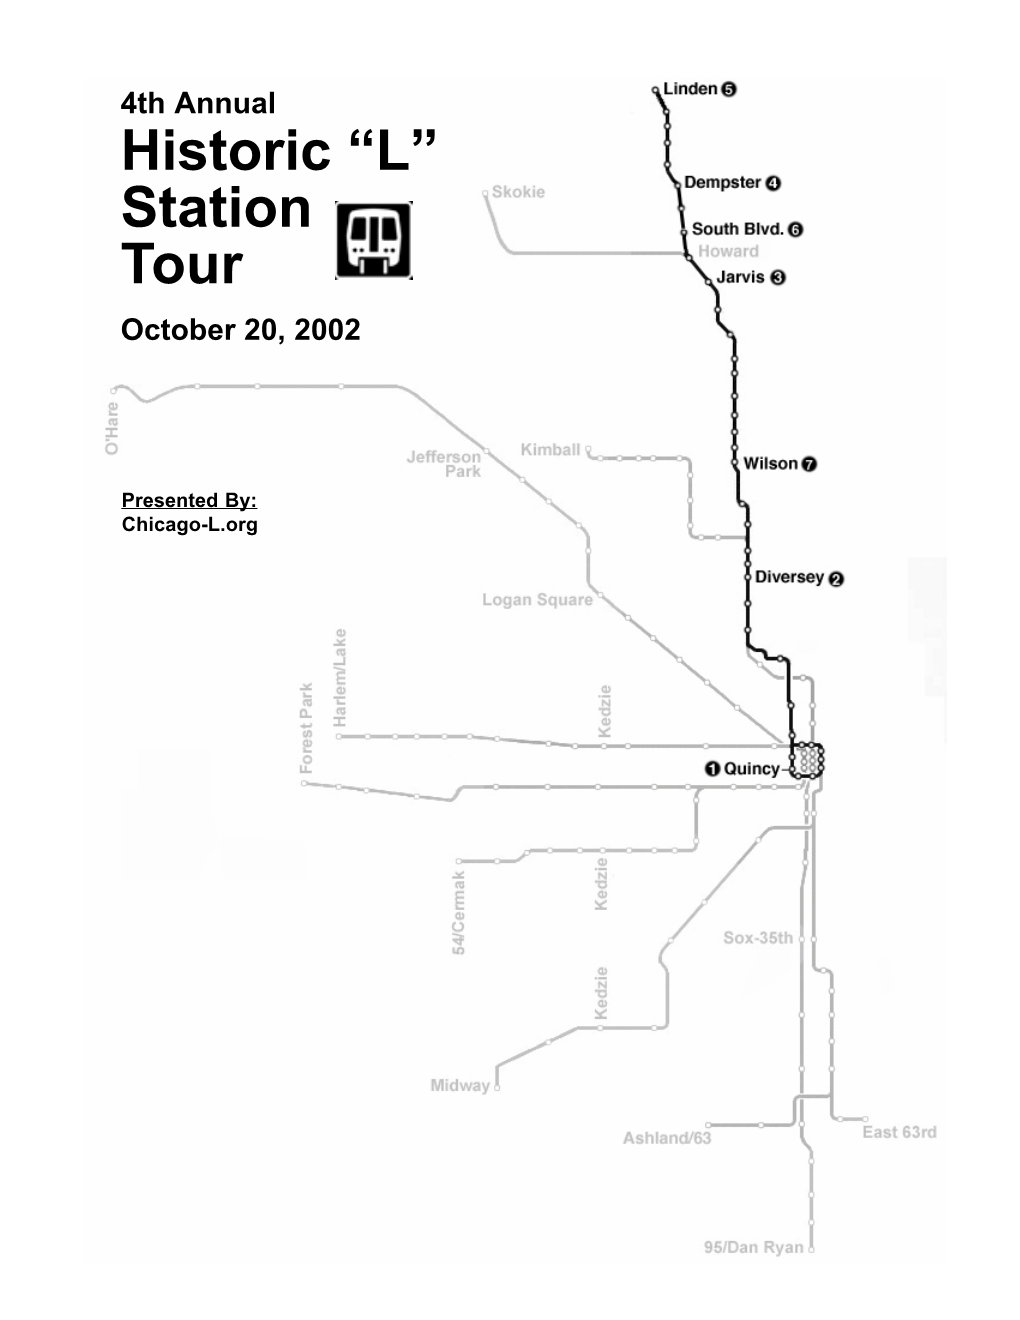 Station Tour October 20, 2002